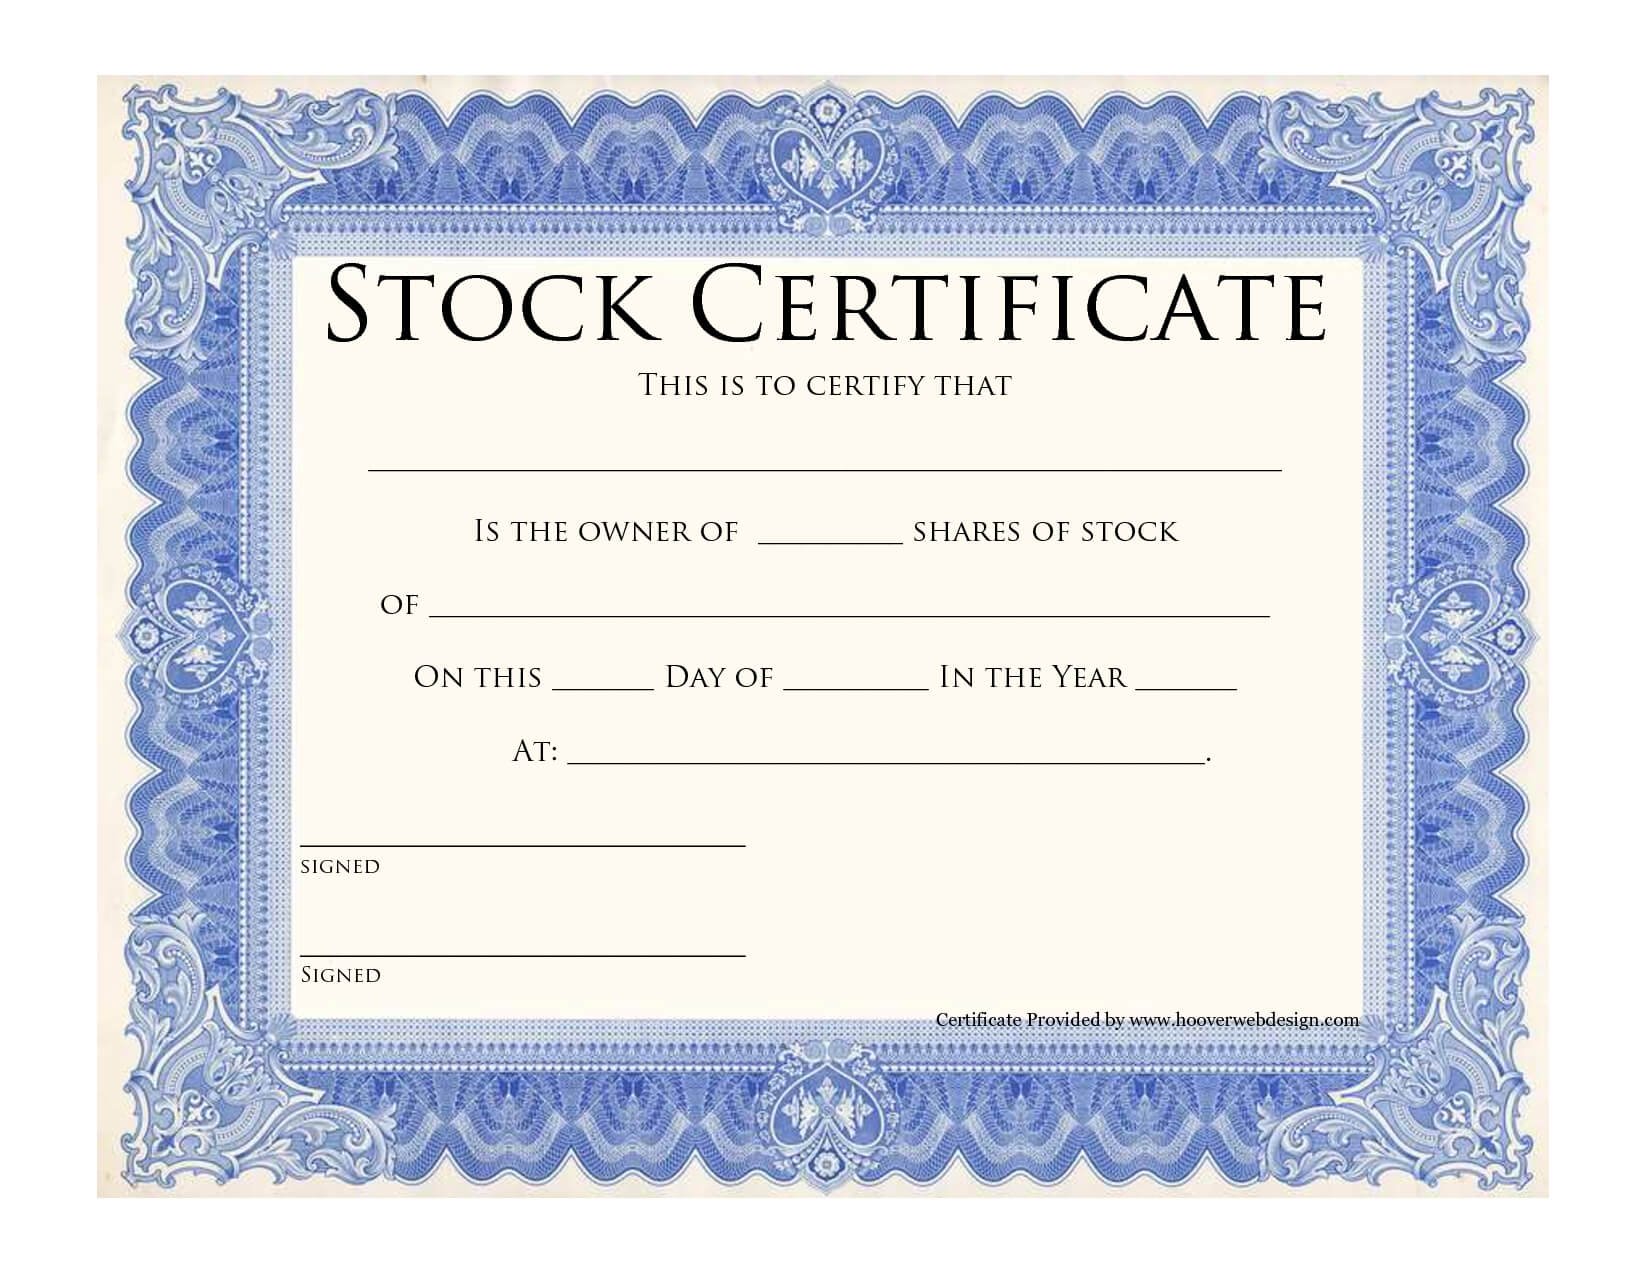 Blank Stock Certificate Template | Printable Stock With Regard To Corporate Bond Certificate Template